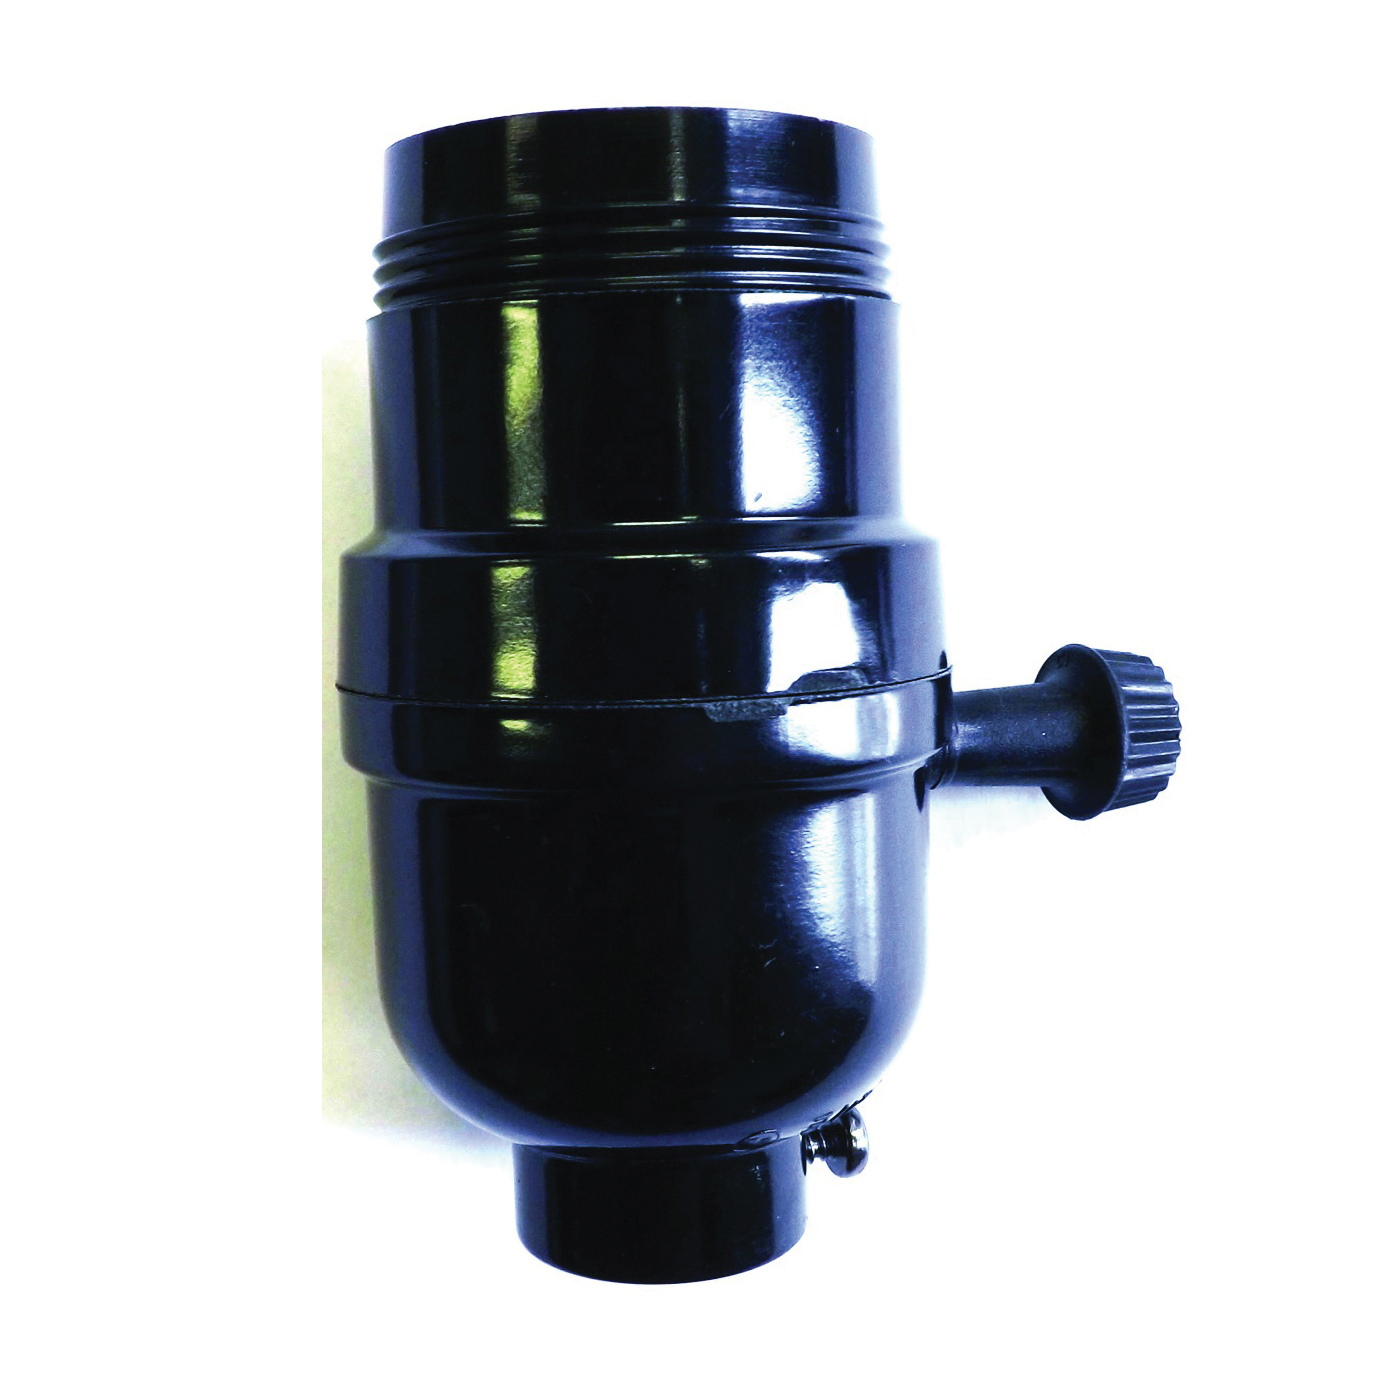 60545 On/Off Turn Knob Lamp Socket, 250 V, 250 W, Phenolic Housing Material, Black